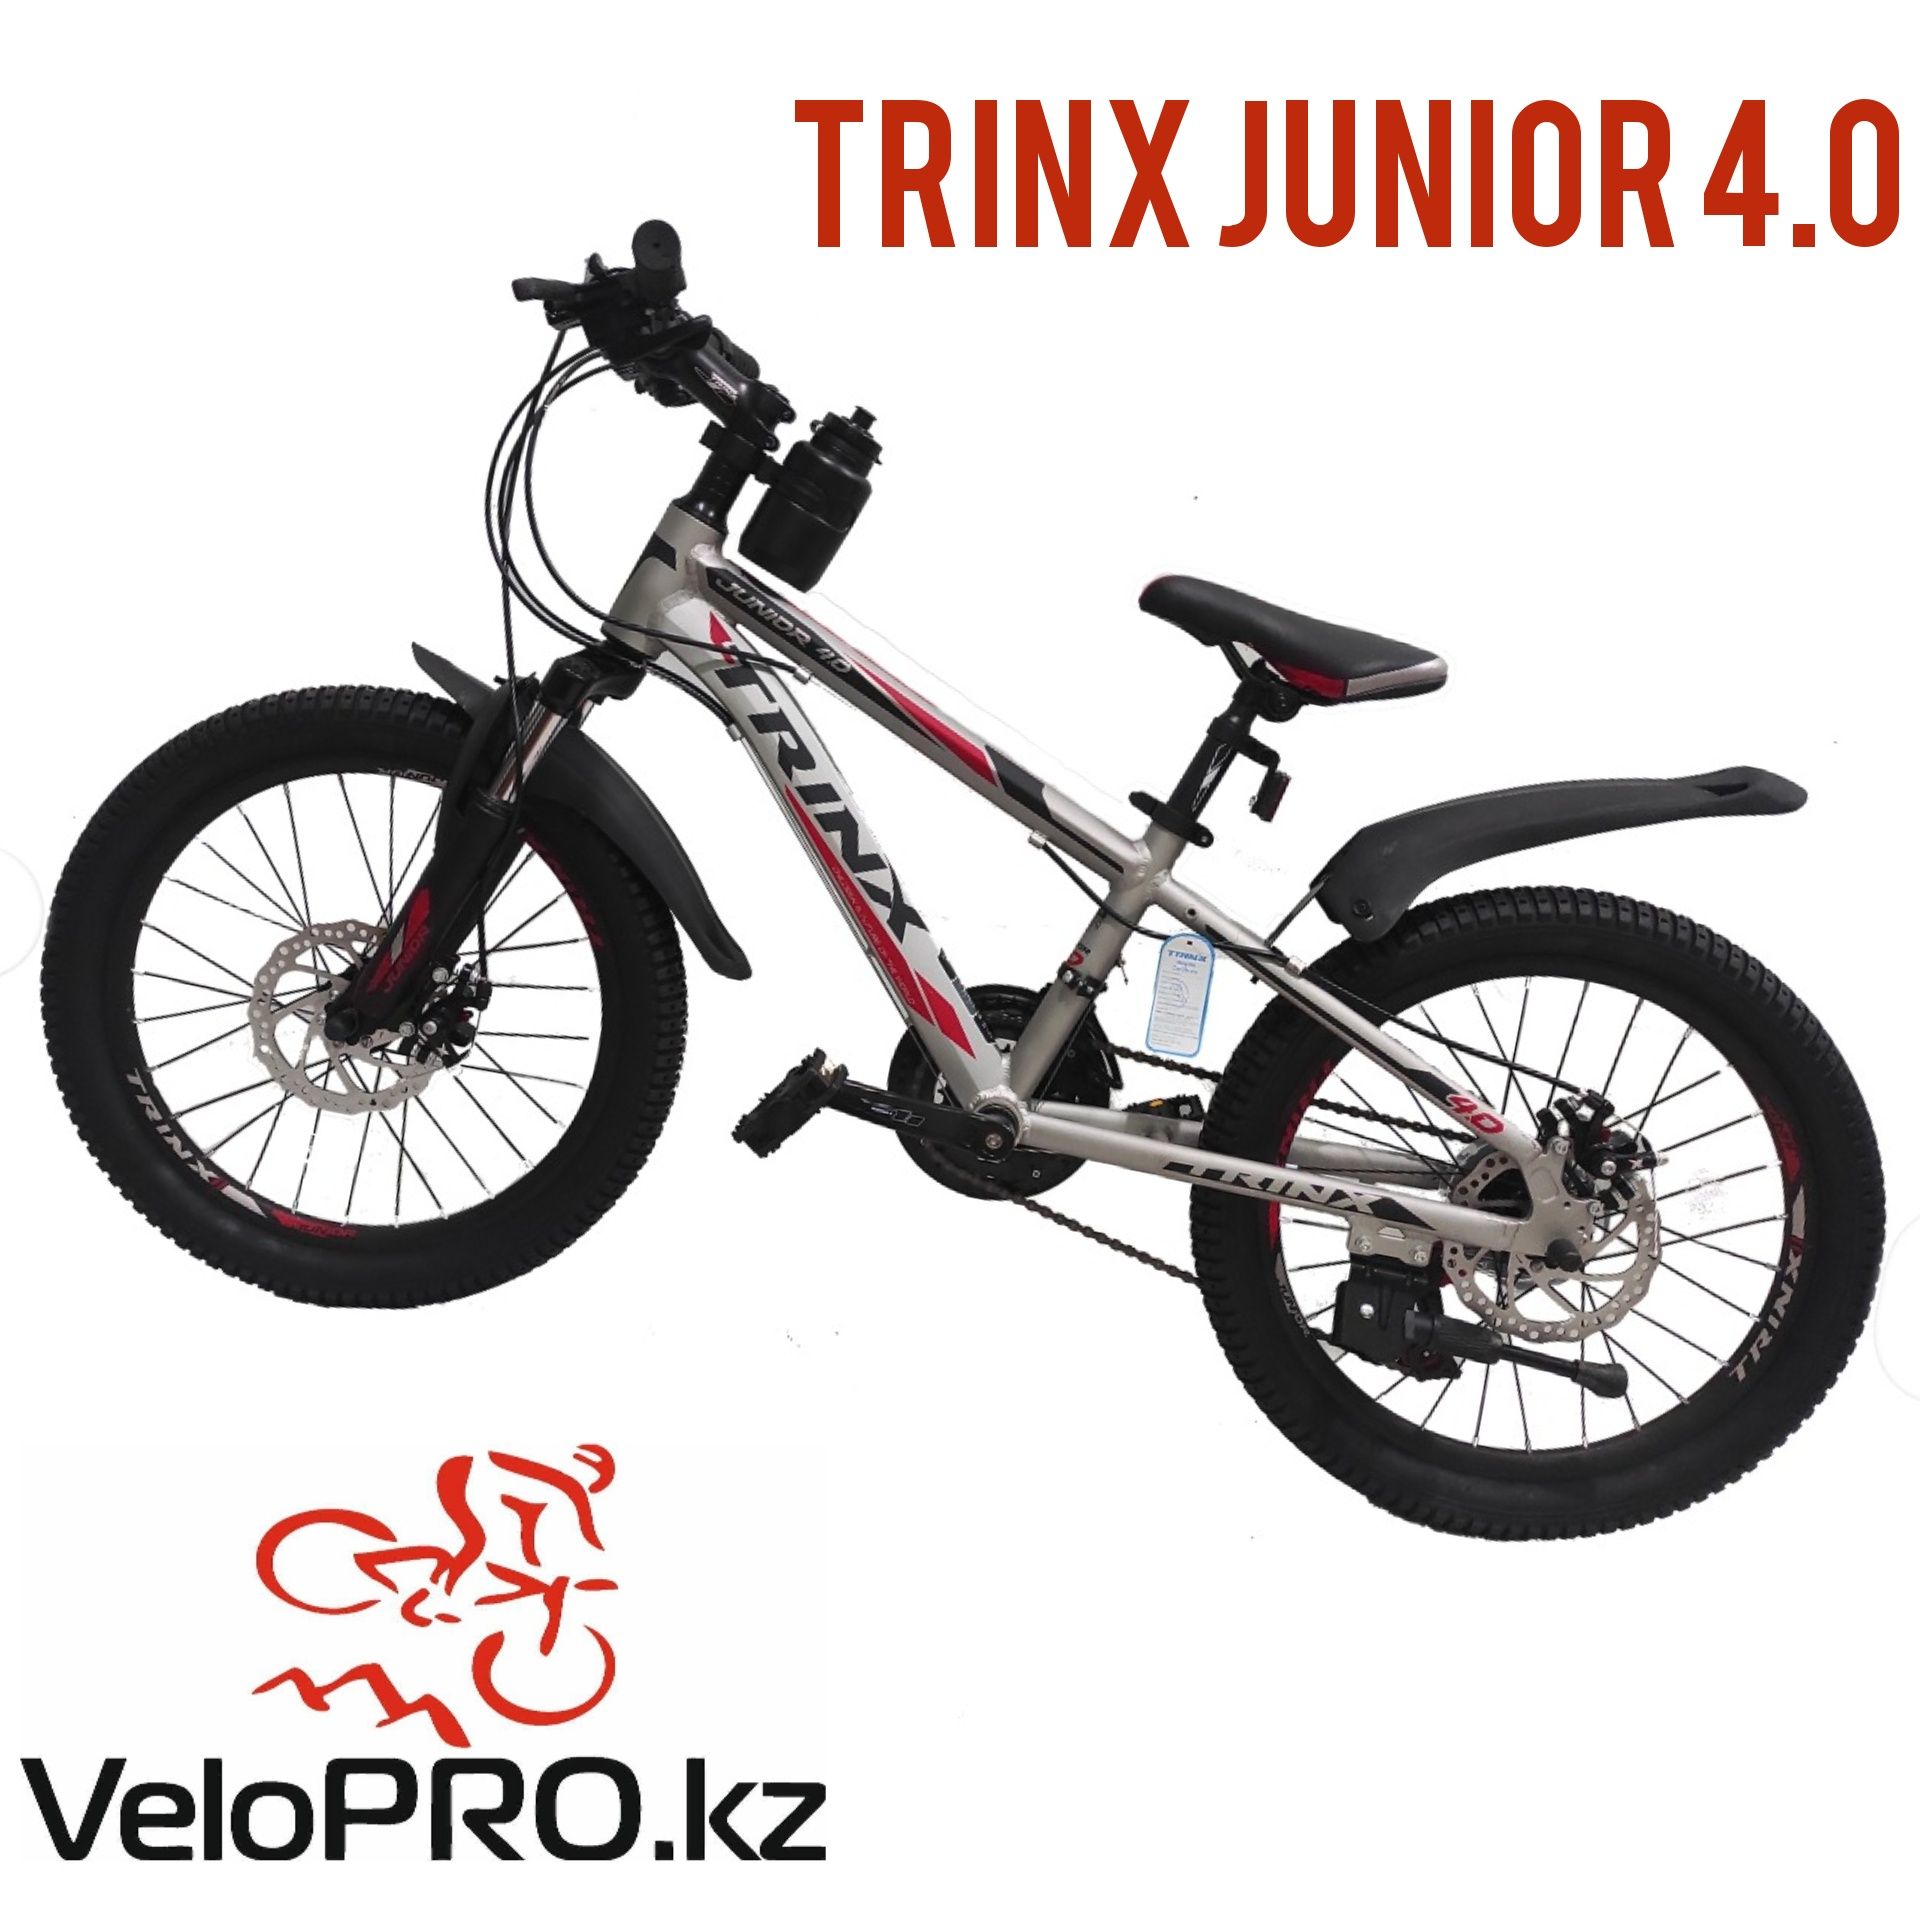 Велосипед Trinx junior, m116, м139, M500. Рама 11-21". Гарантия.